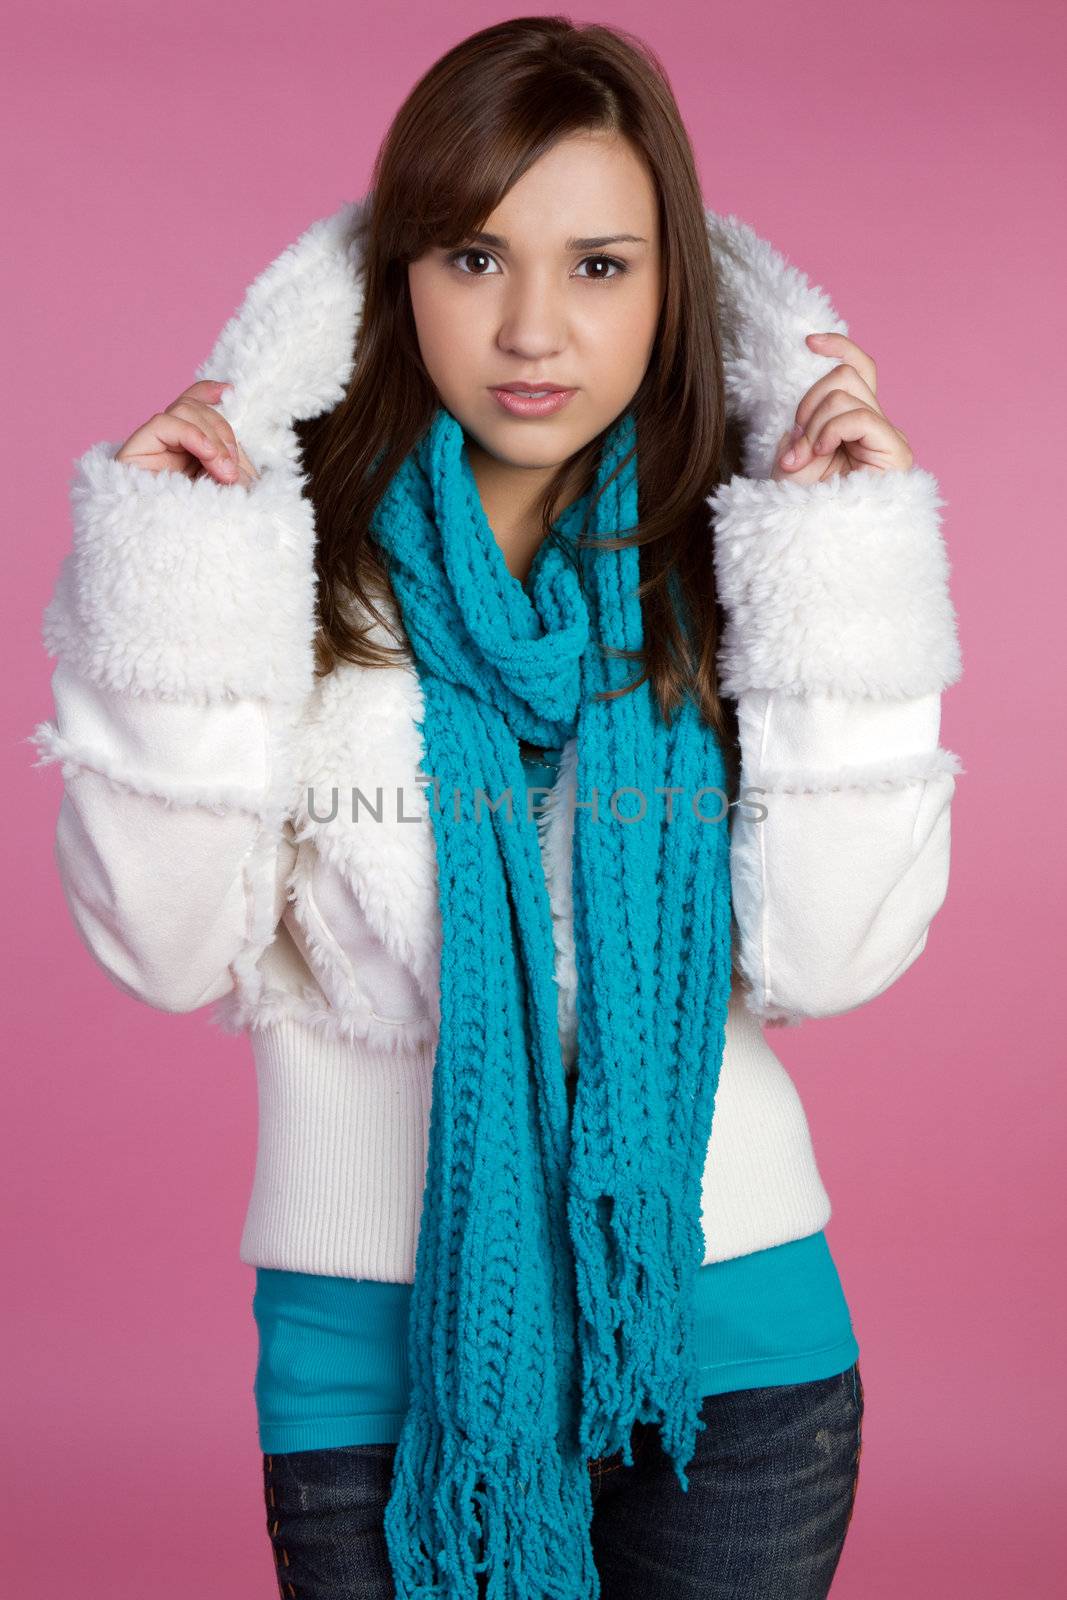 Beautiful teen winter fashion girl